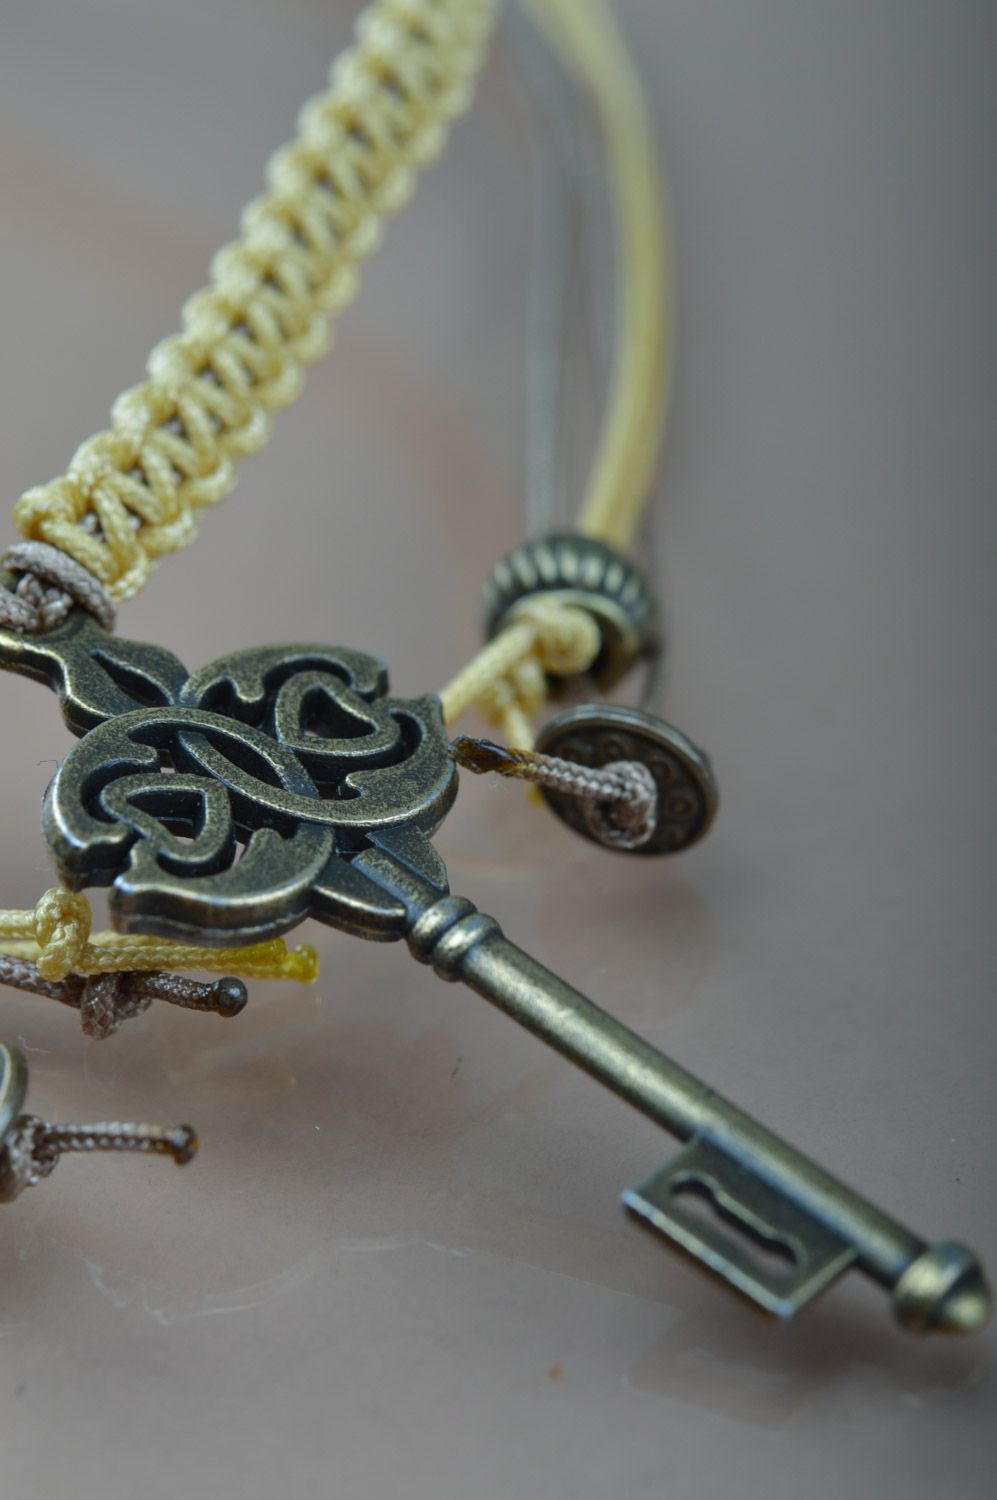 Handmade friendship wrist bracelet woven of cord with metal key-shaped charm photo 4